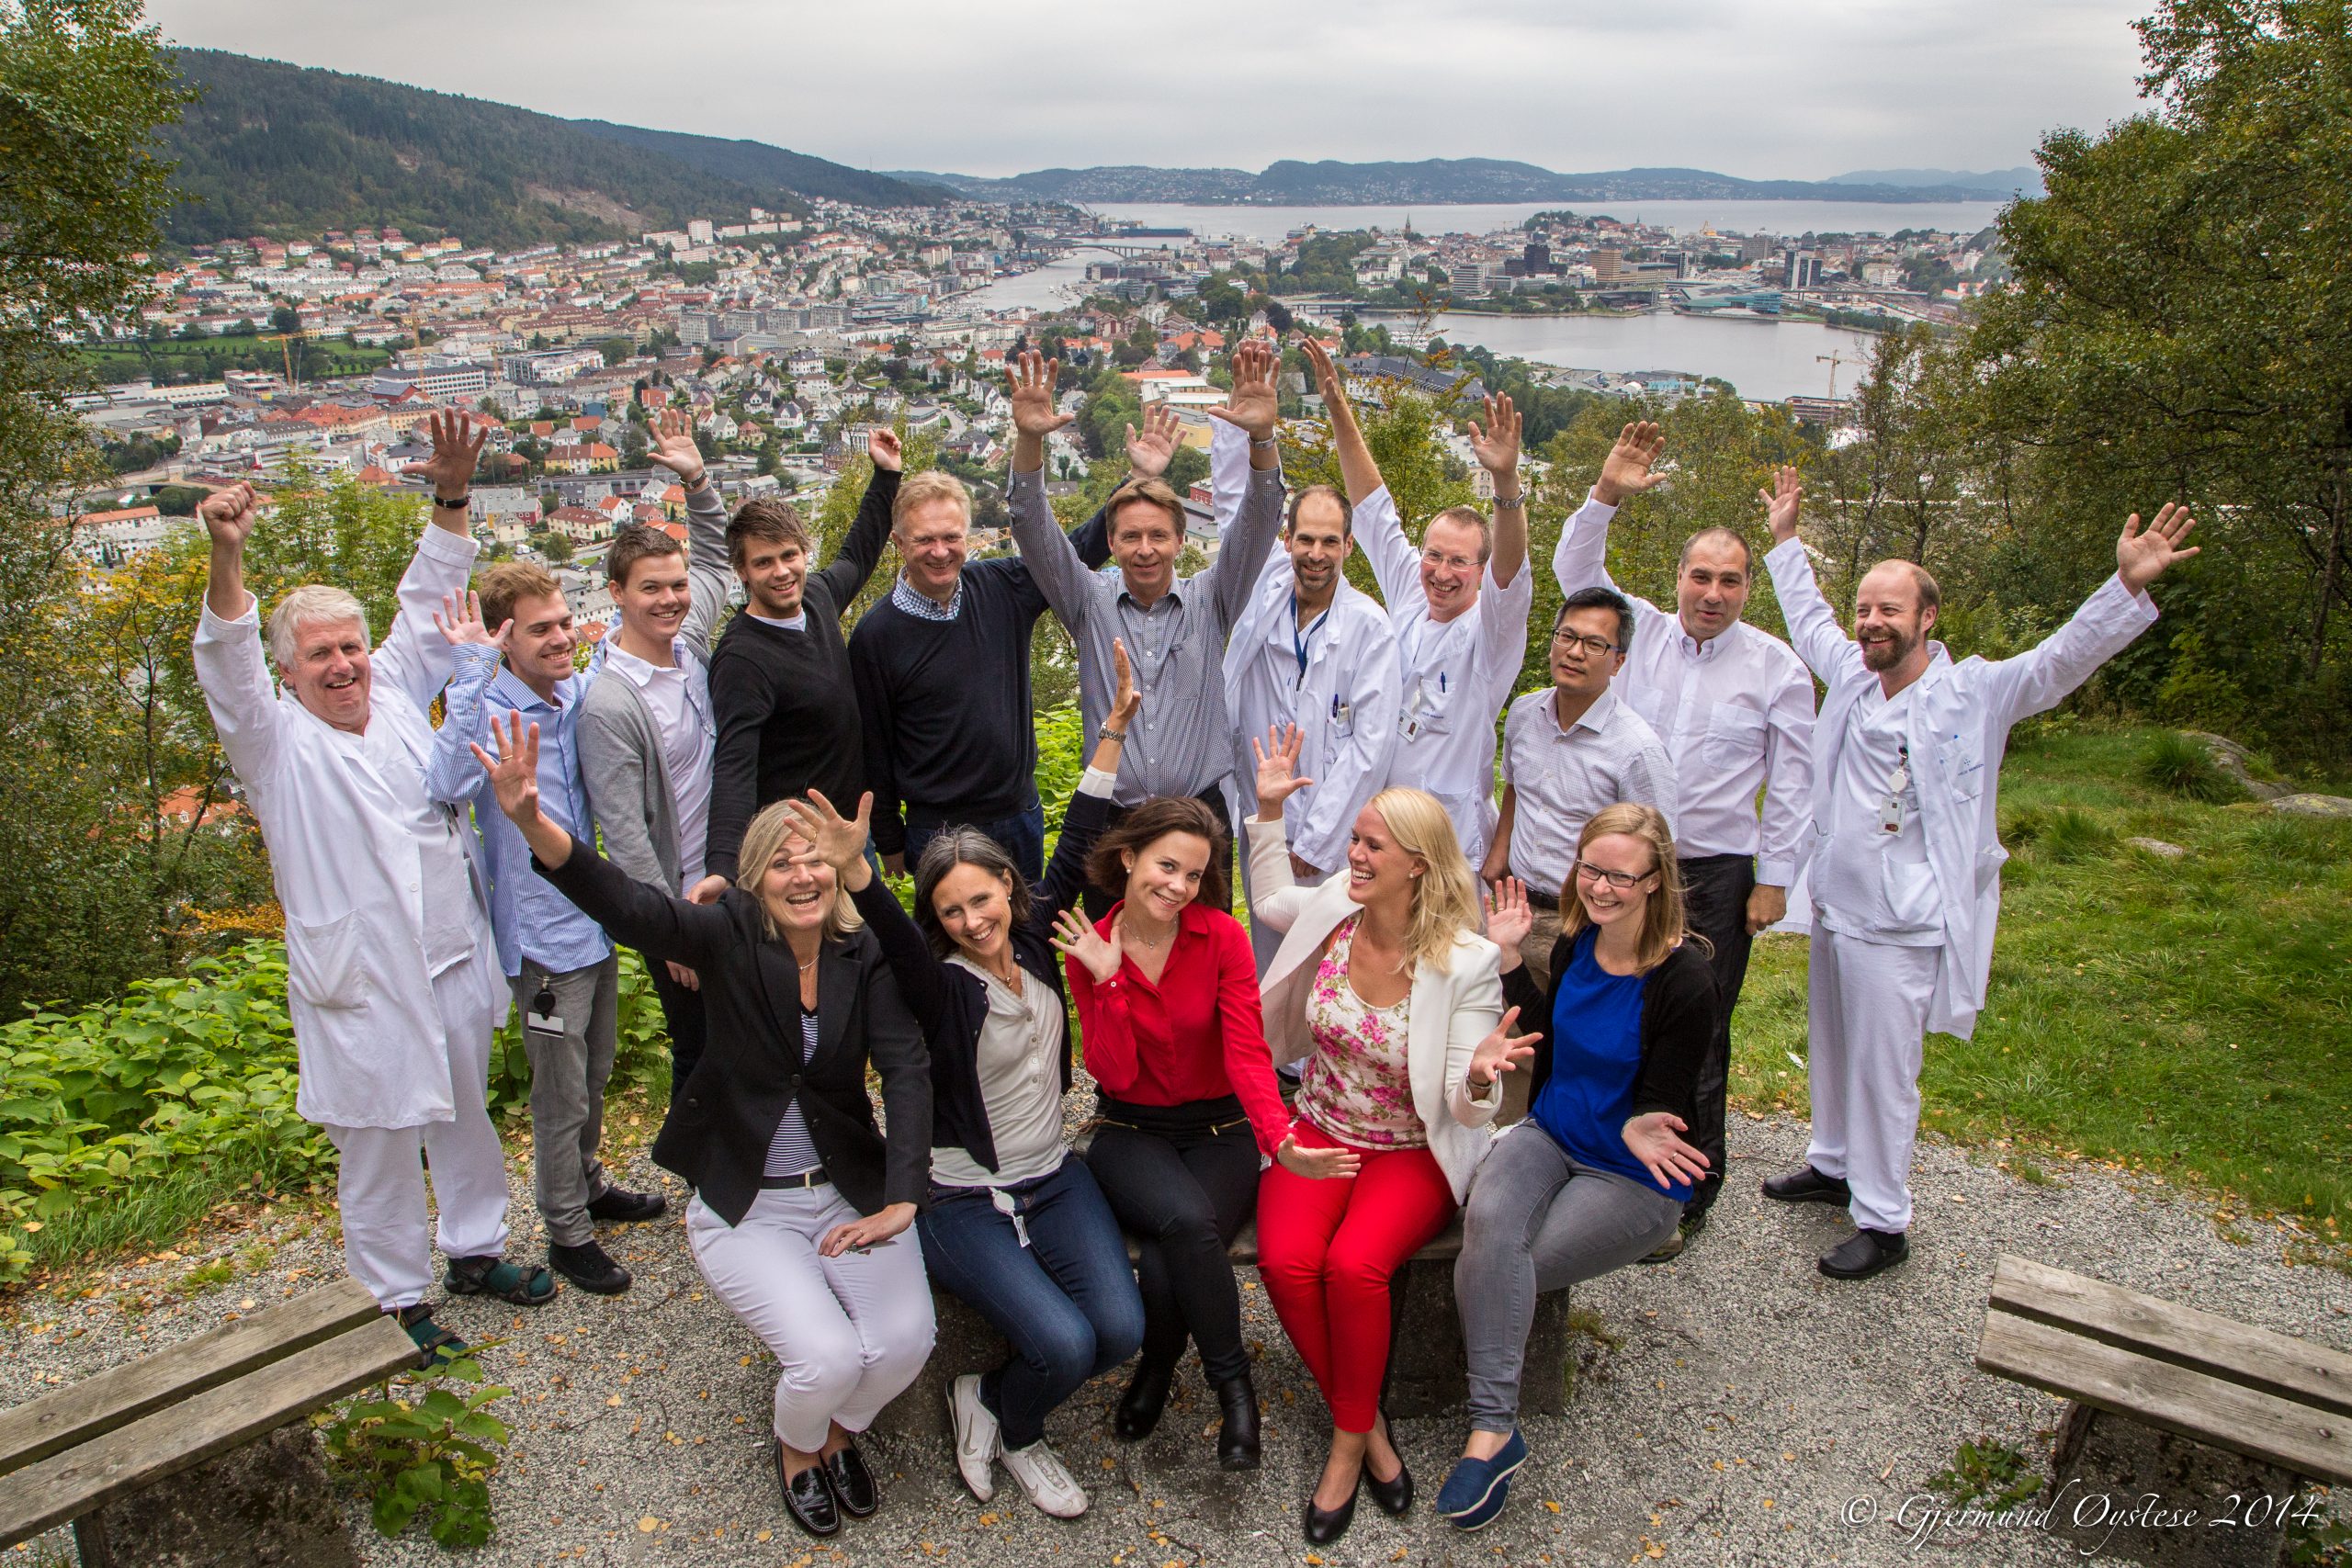 <span class="hpt_headertitle">National Centre for Ultrasound in Gastroenterology, Bergen, Norway</span>